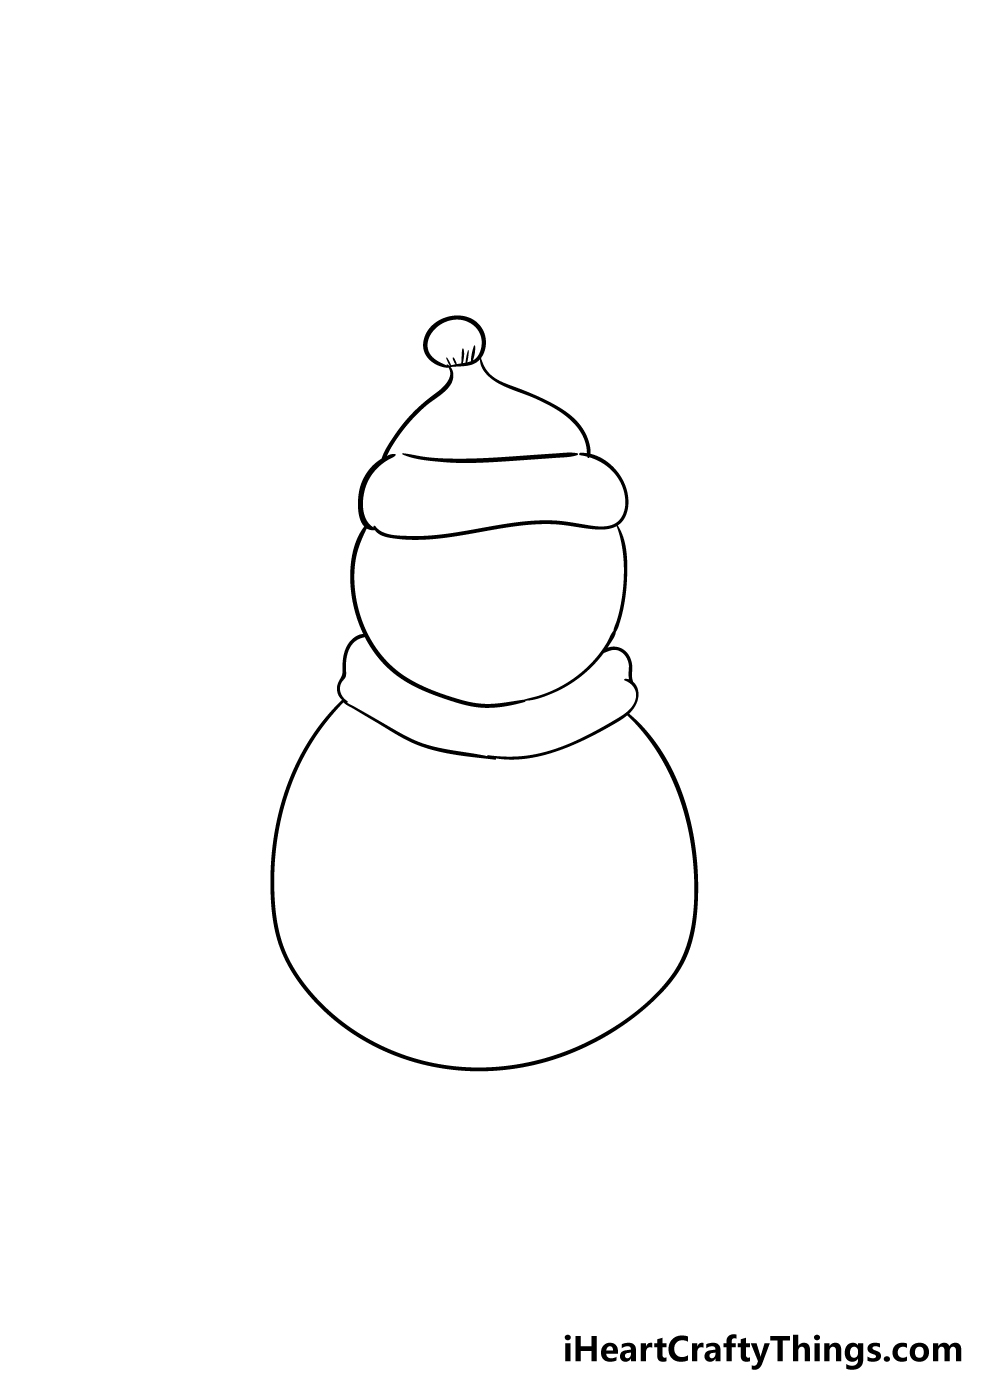 snowman drawing step 3